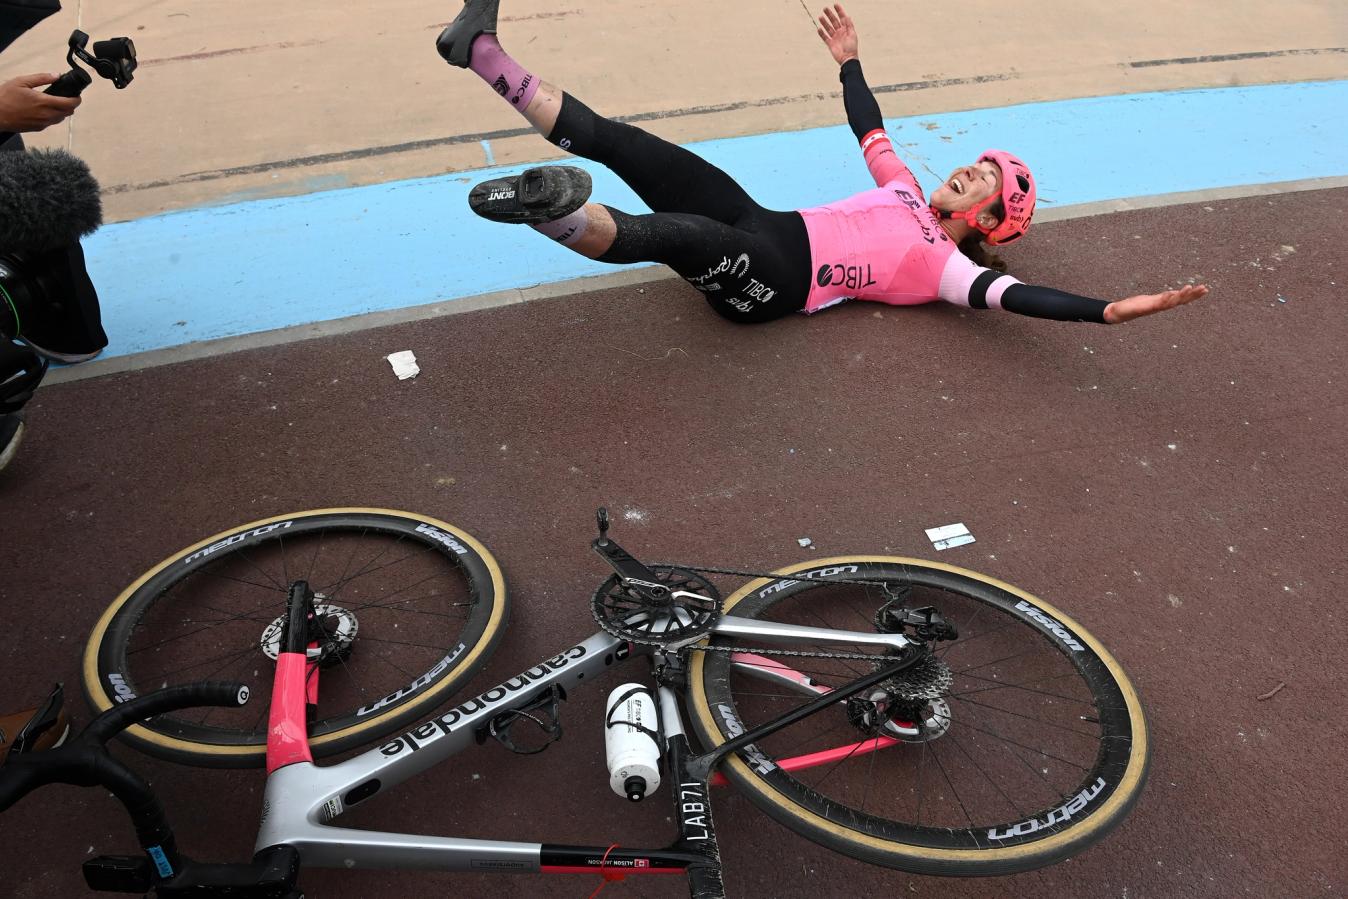 Alison Jackson celebrates alongside her Cannondale bike after winning Paris-Roubaix Femmes